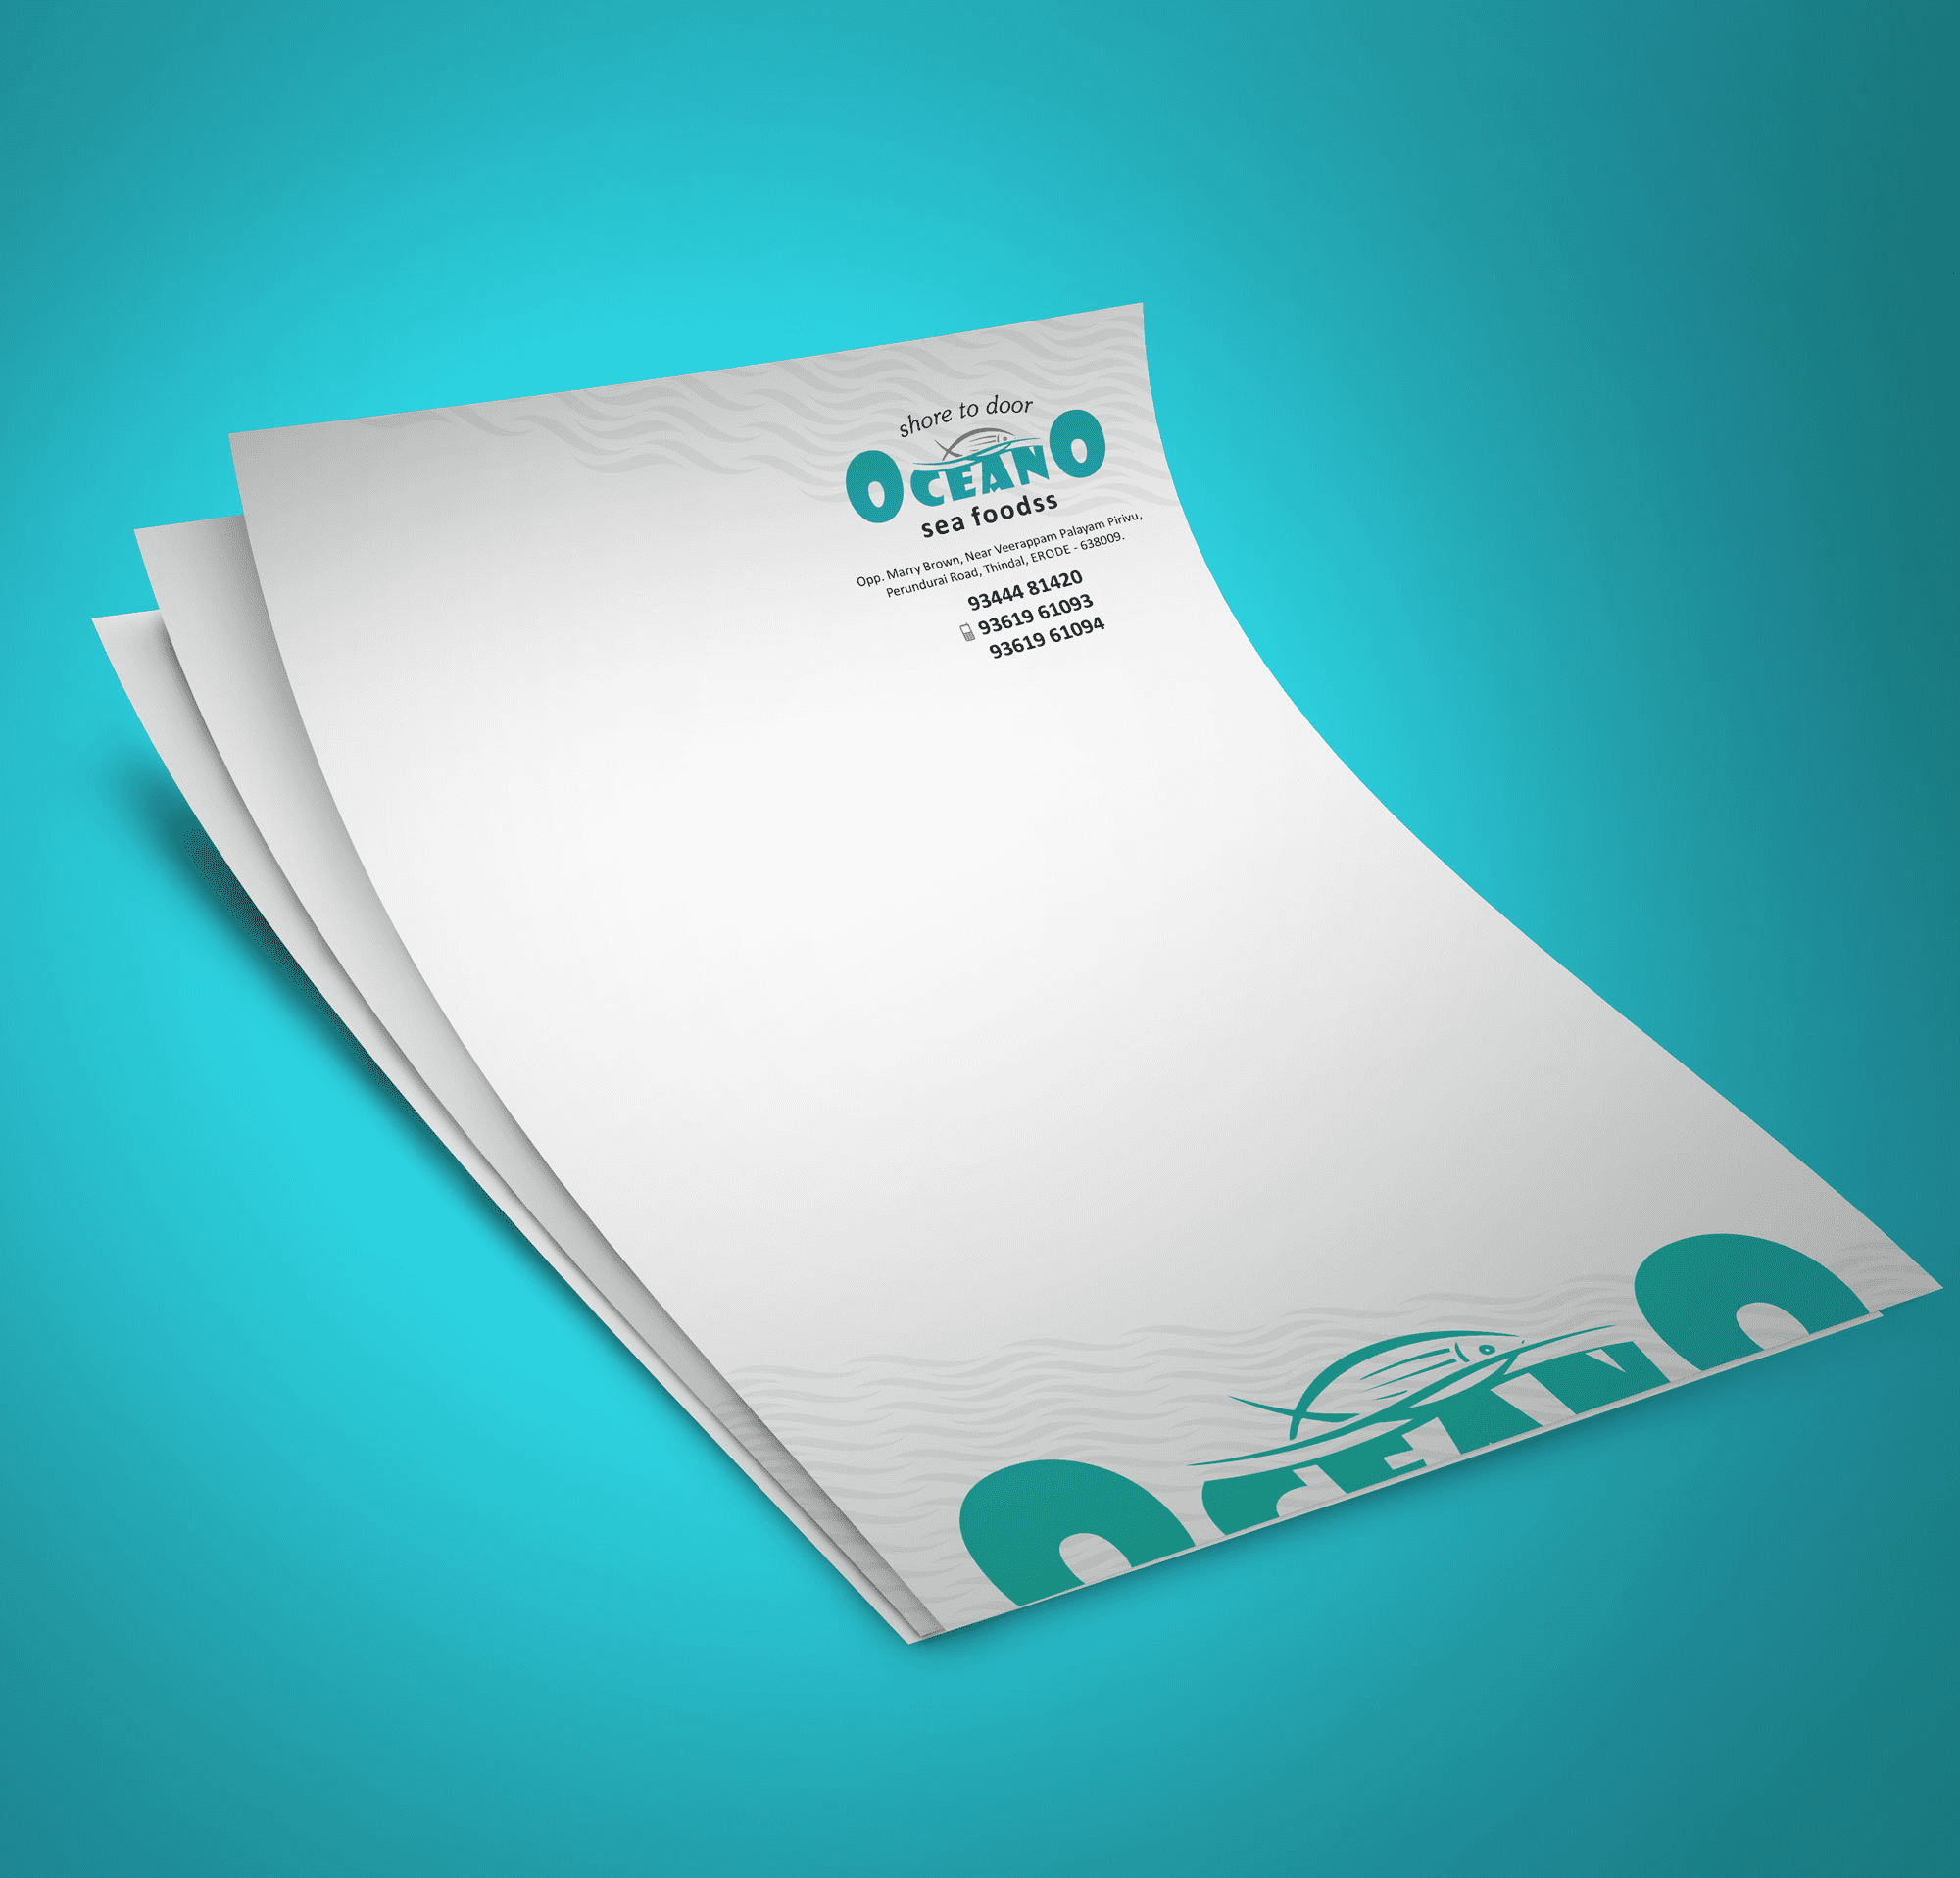 Oceano Sea Food Letter Head Graphic Design, Branding Packaging Design in Karur by Creative Prints thecreativeprints